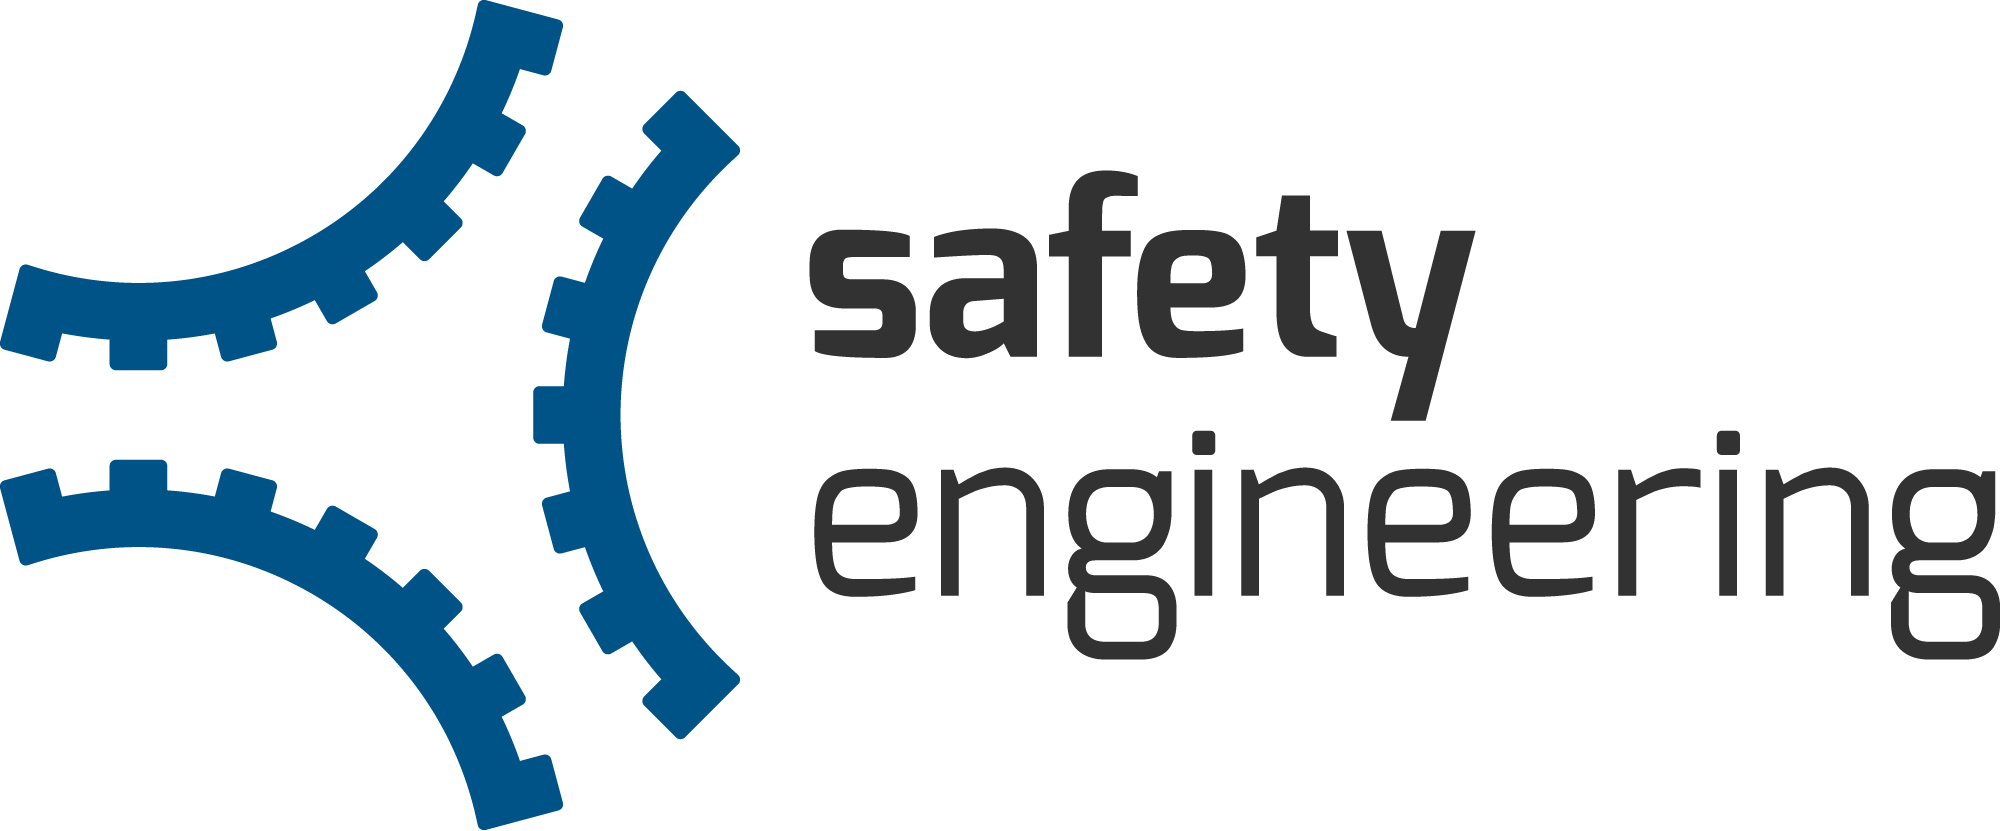 Safety Engineering.jpg